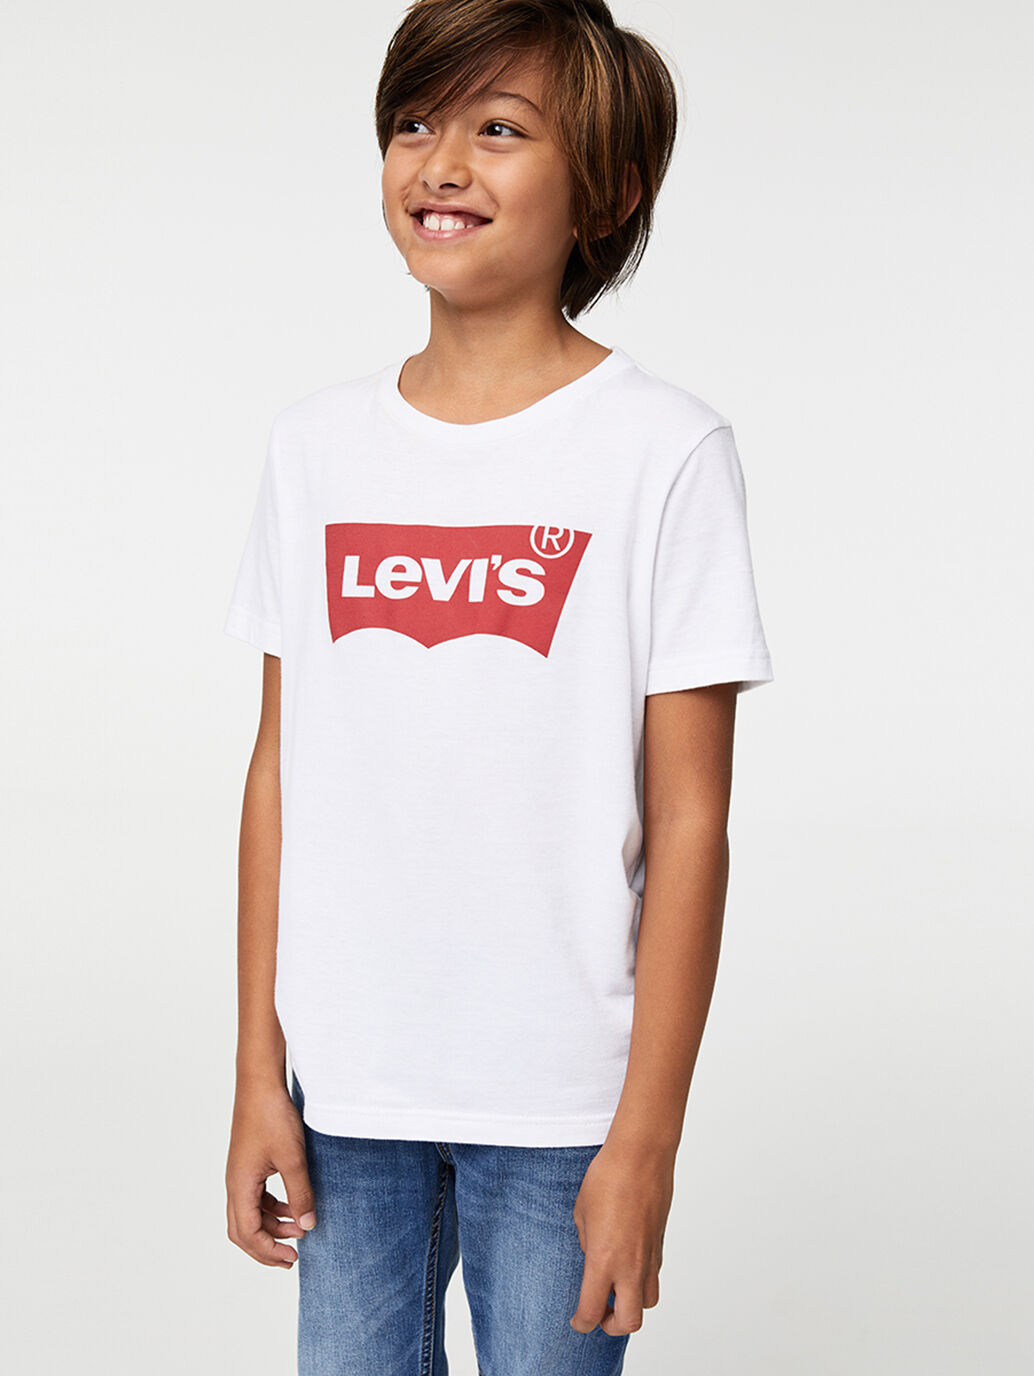 childrens levis t shirt